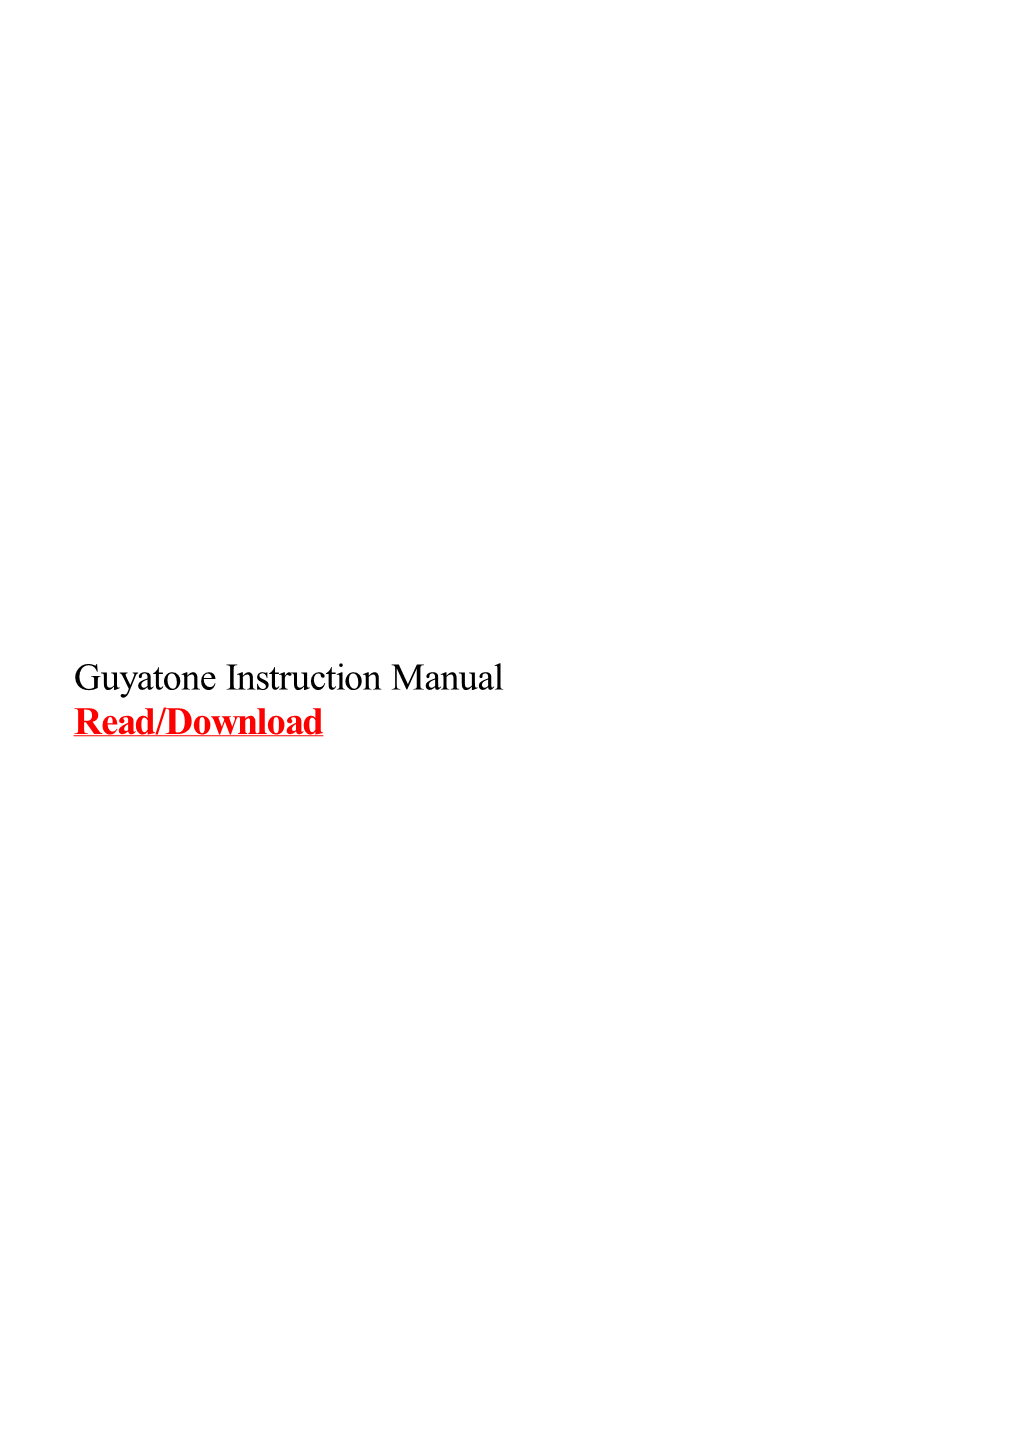 Guyatone Instruction Manual